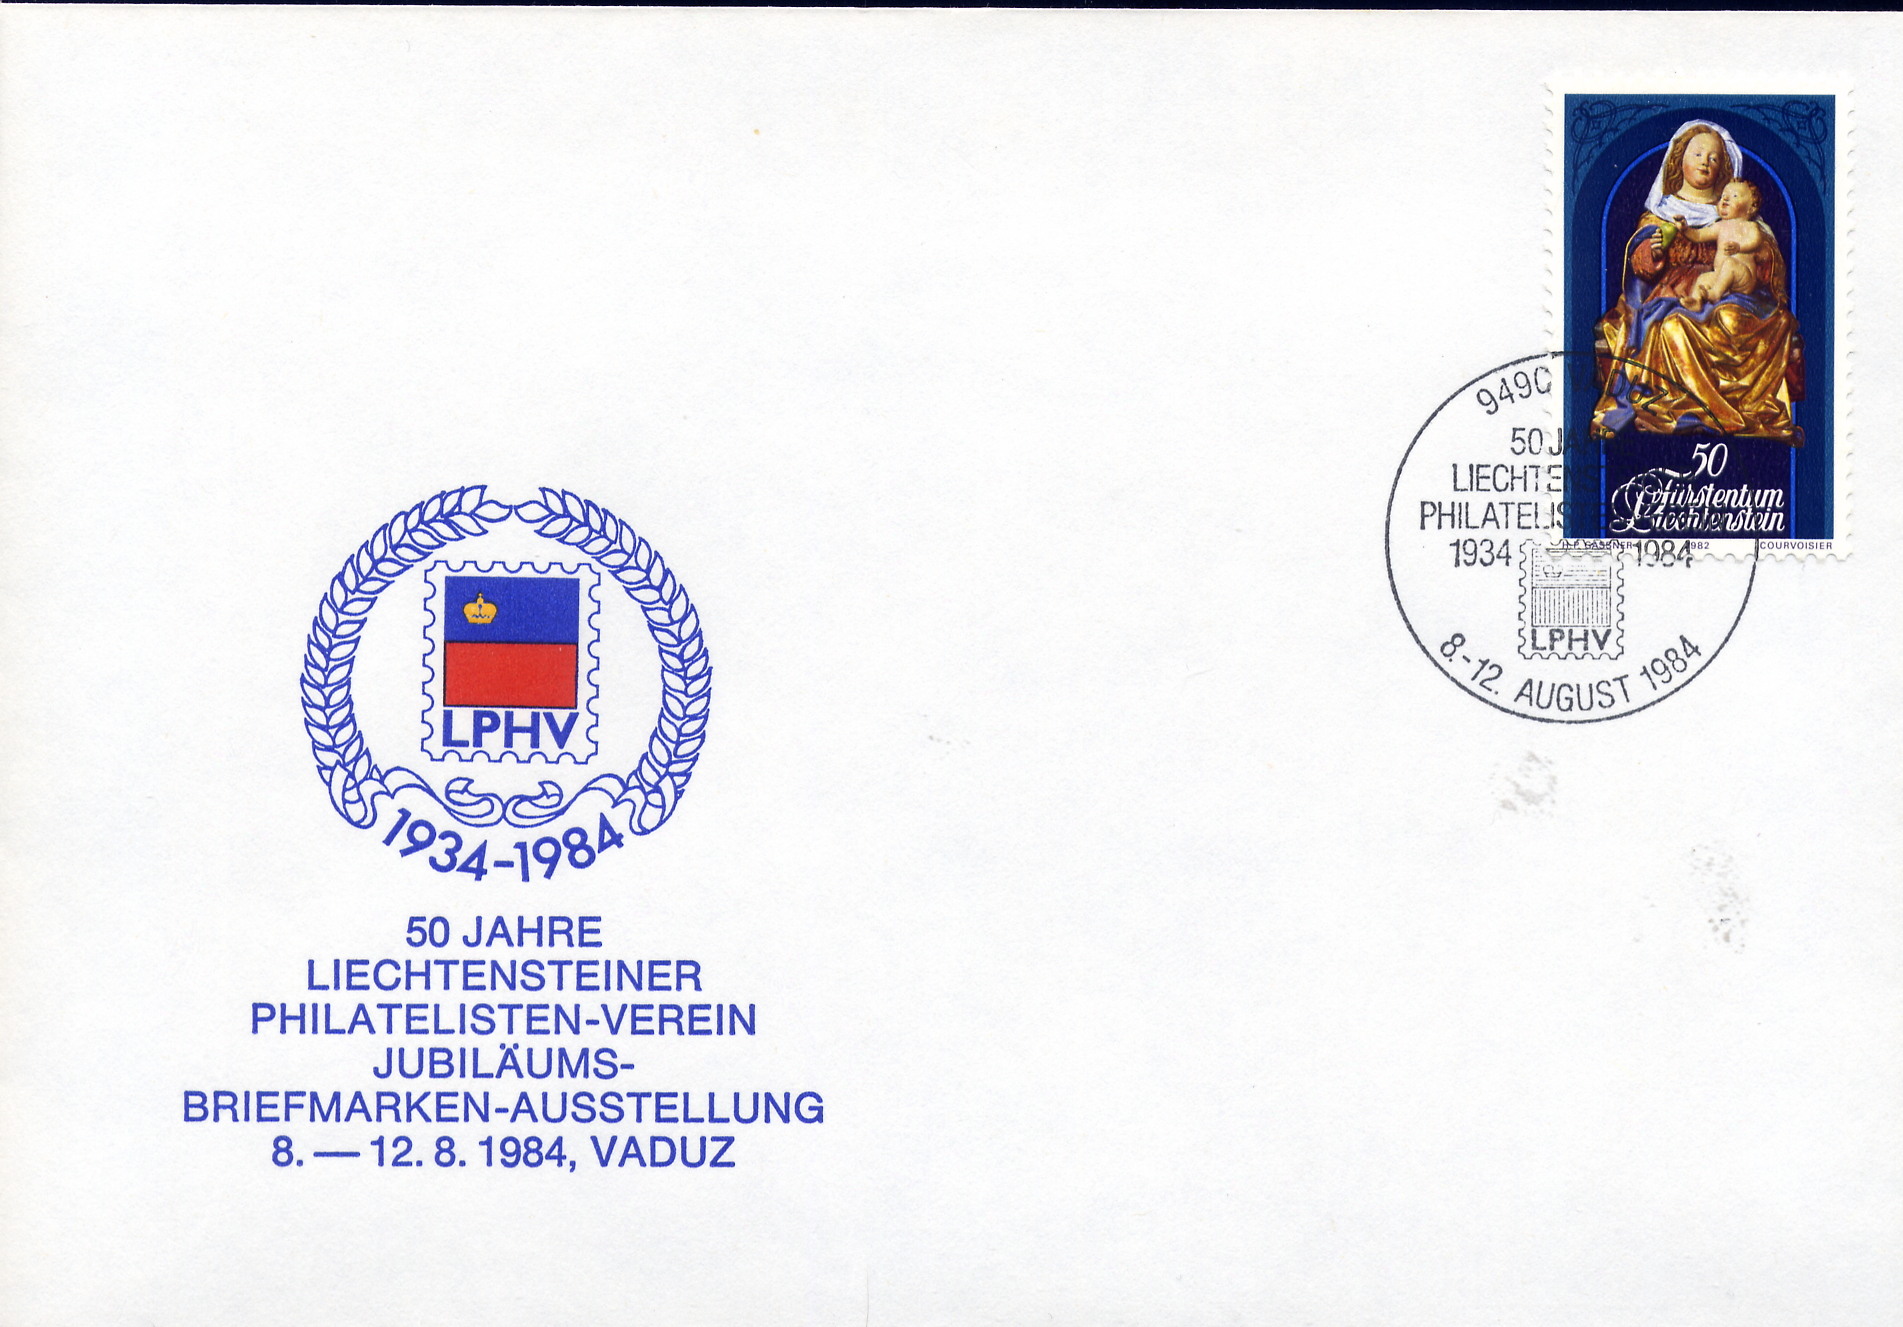 https://swiss-stamps.org/wp-content/uploads/2023/12/1984-8-50.-LPHV-3.jpg